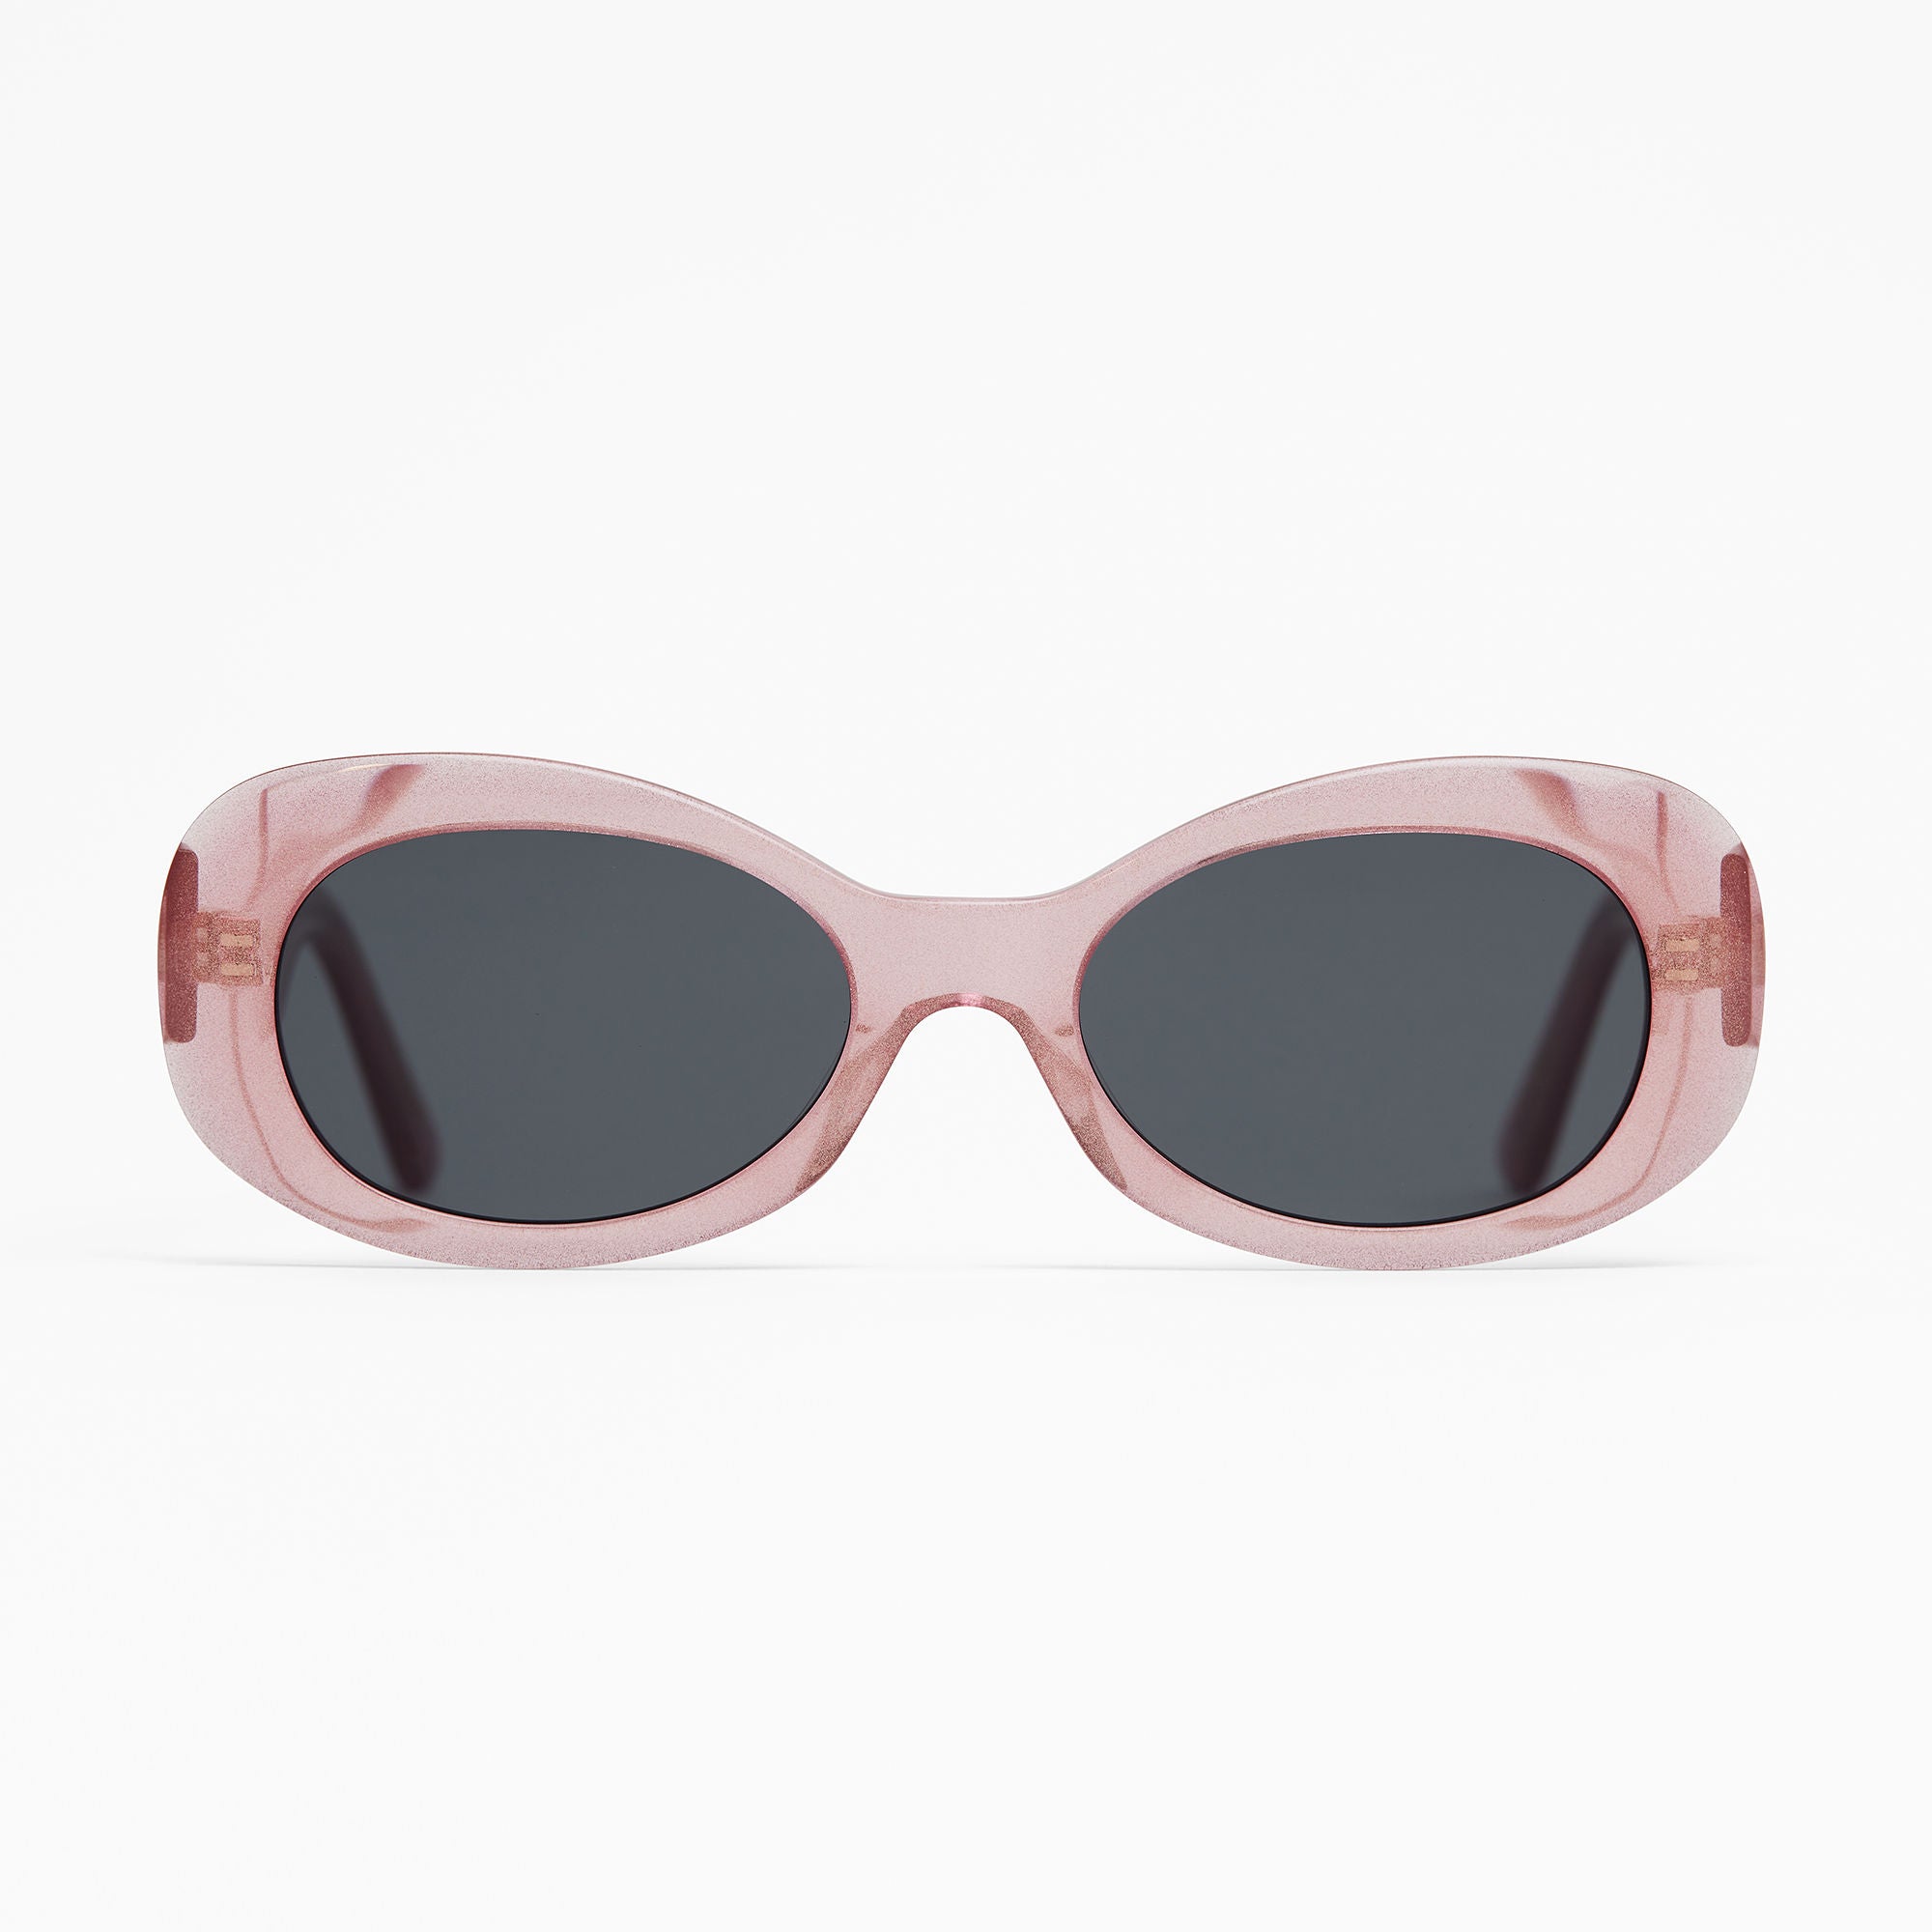 Dan Levy Atlas Designer Sunglasses